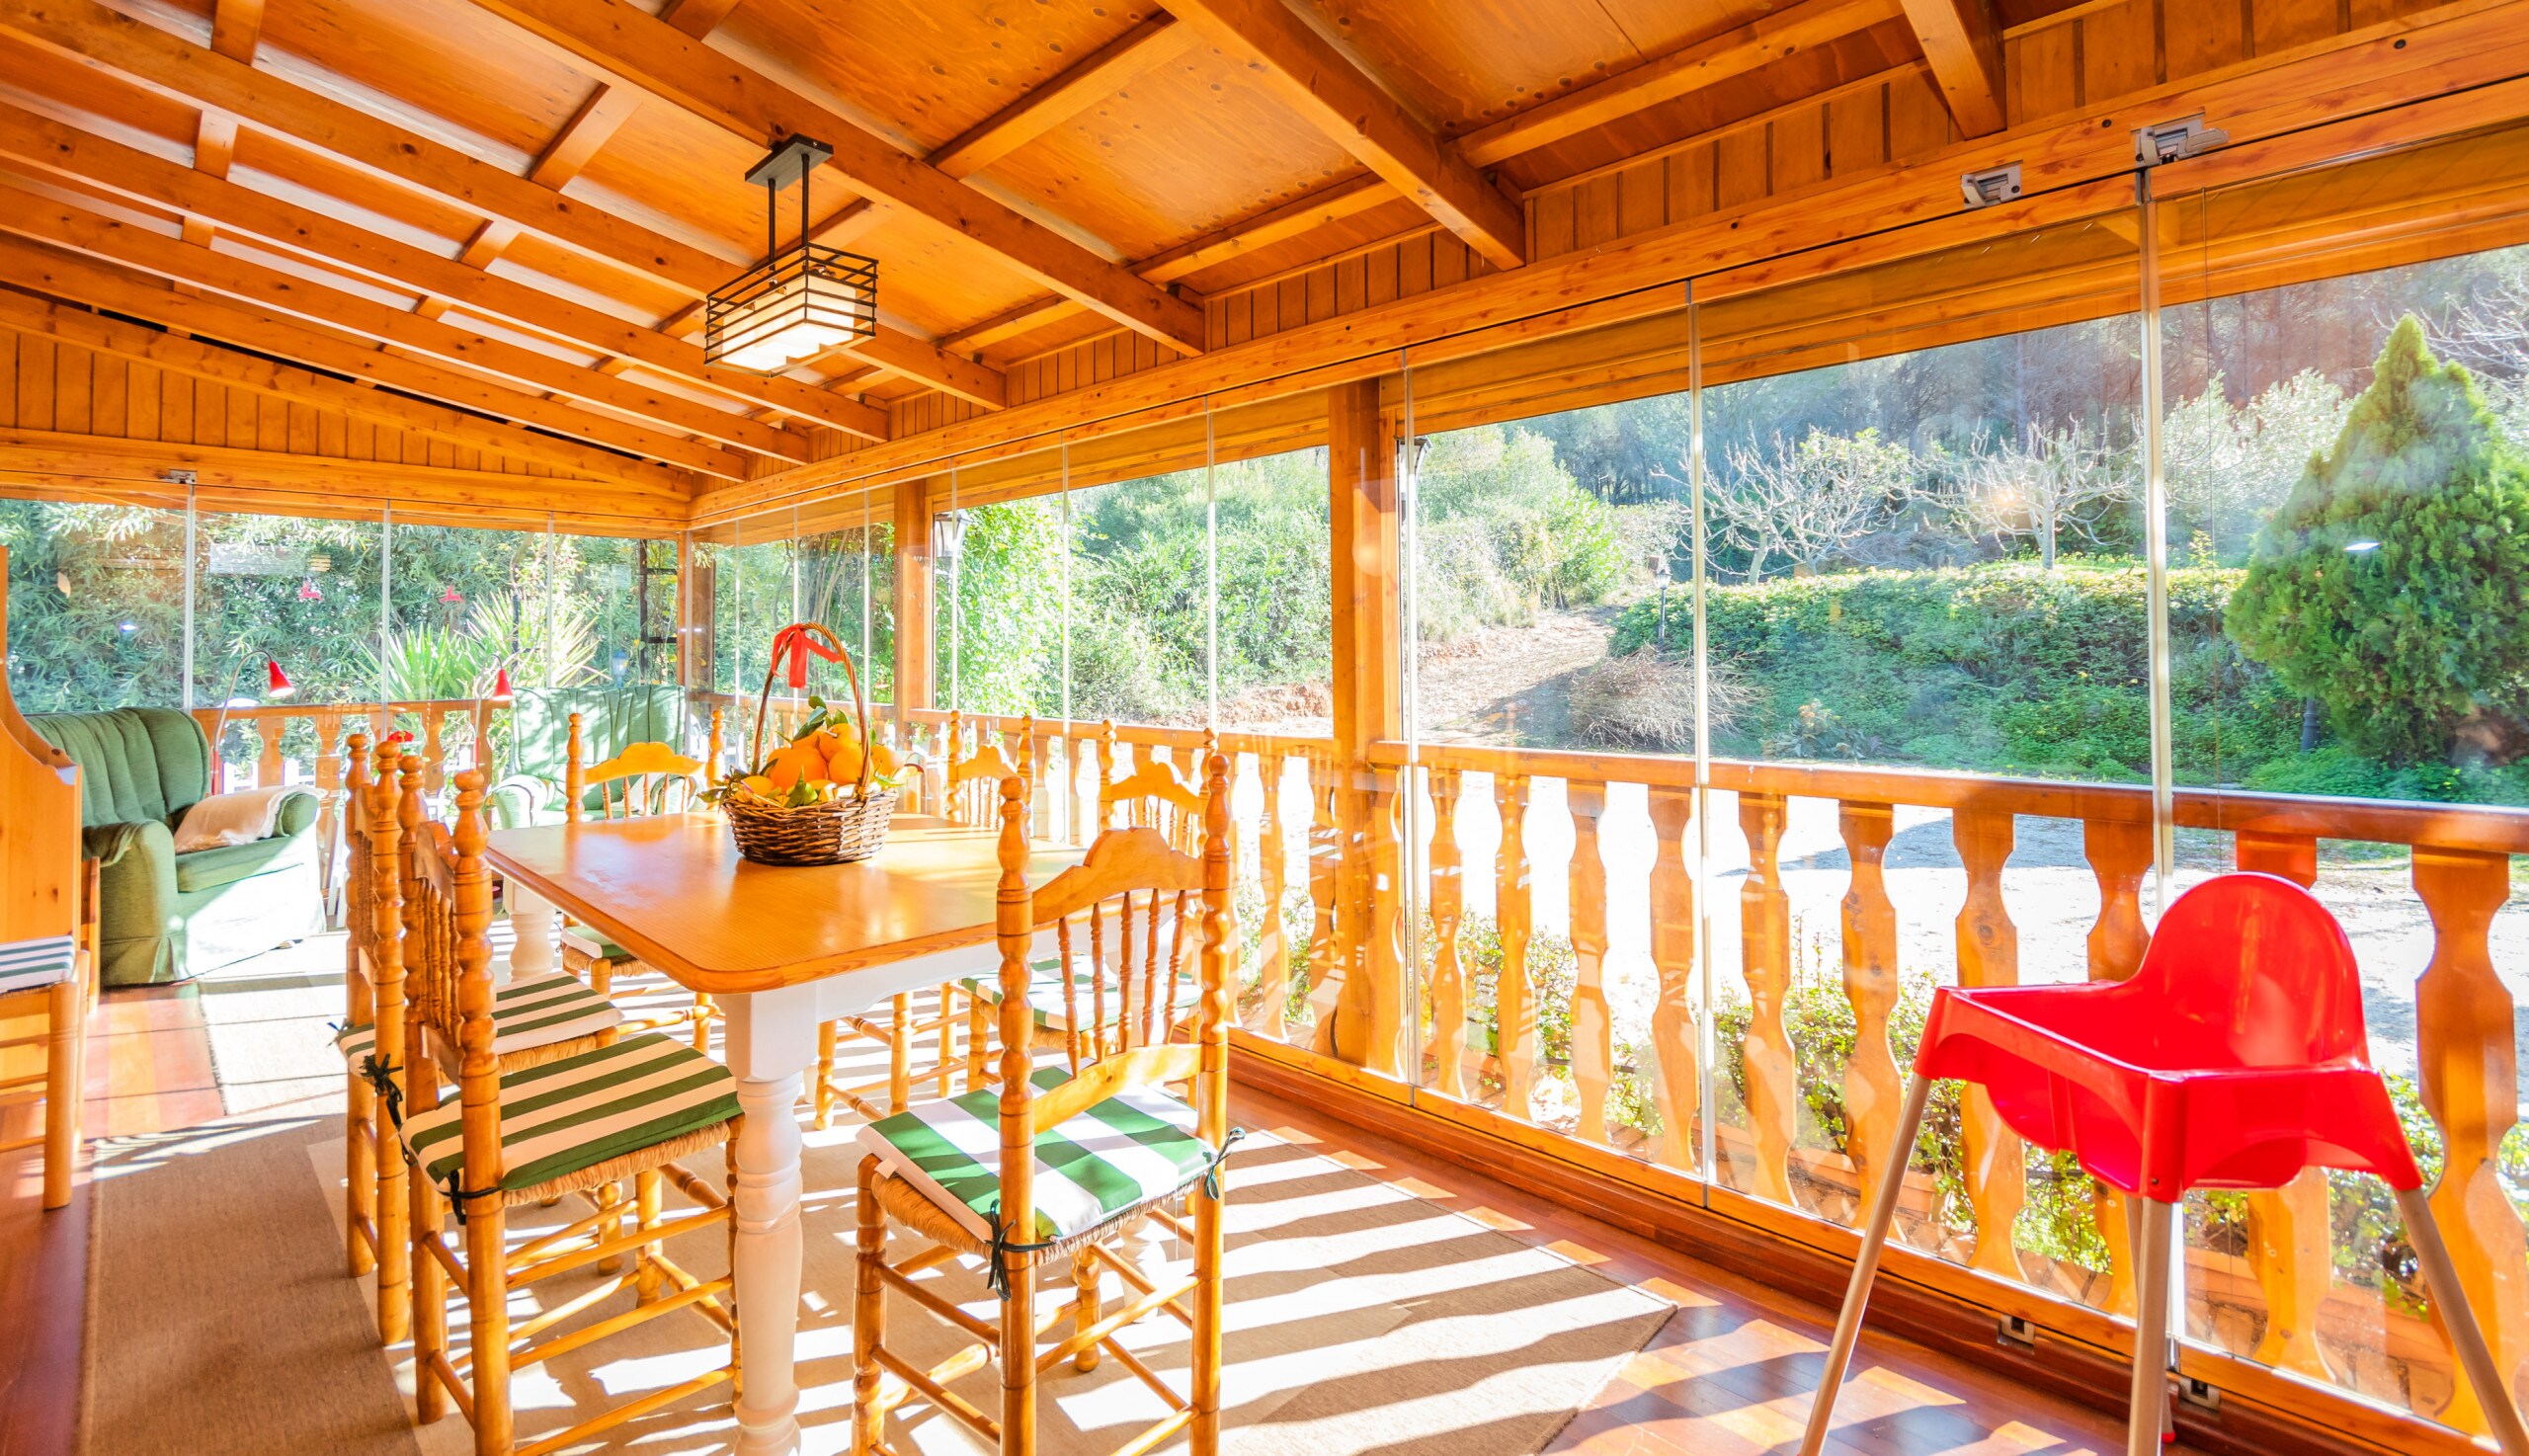 Enjoy the terrace of this wooden house in Alhaurín el Grande